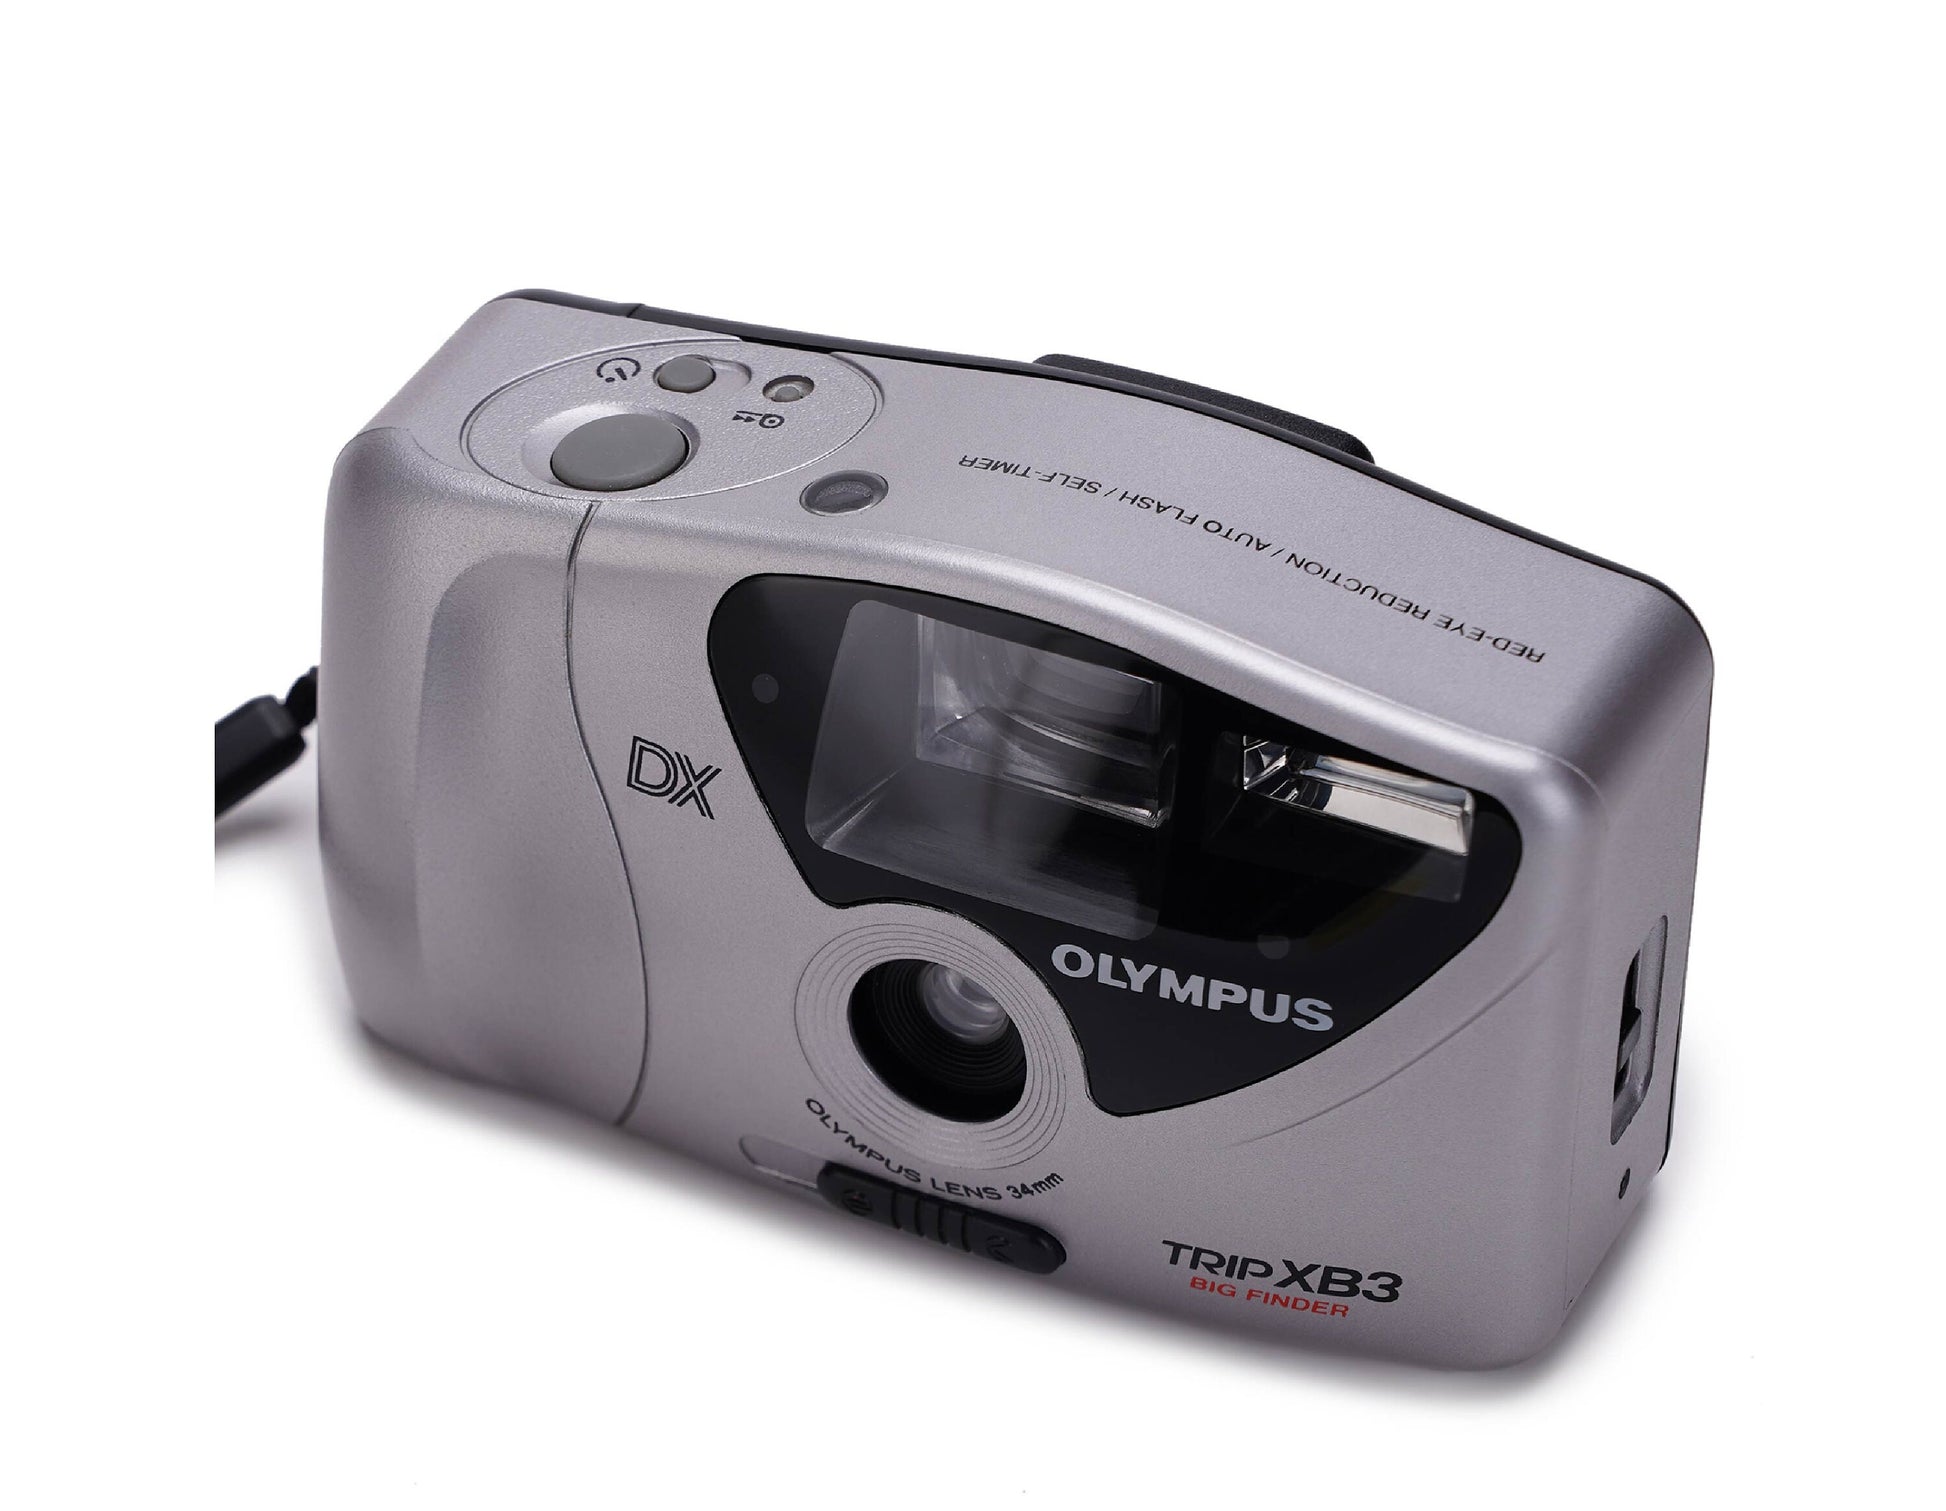 Olympus Trip XB3, Working Film Camera, Vintage Camera, Olympus Trip, 35mm film camera - Vintage Polaroid Instant Cameras